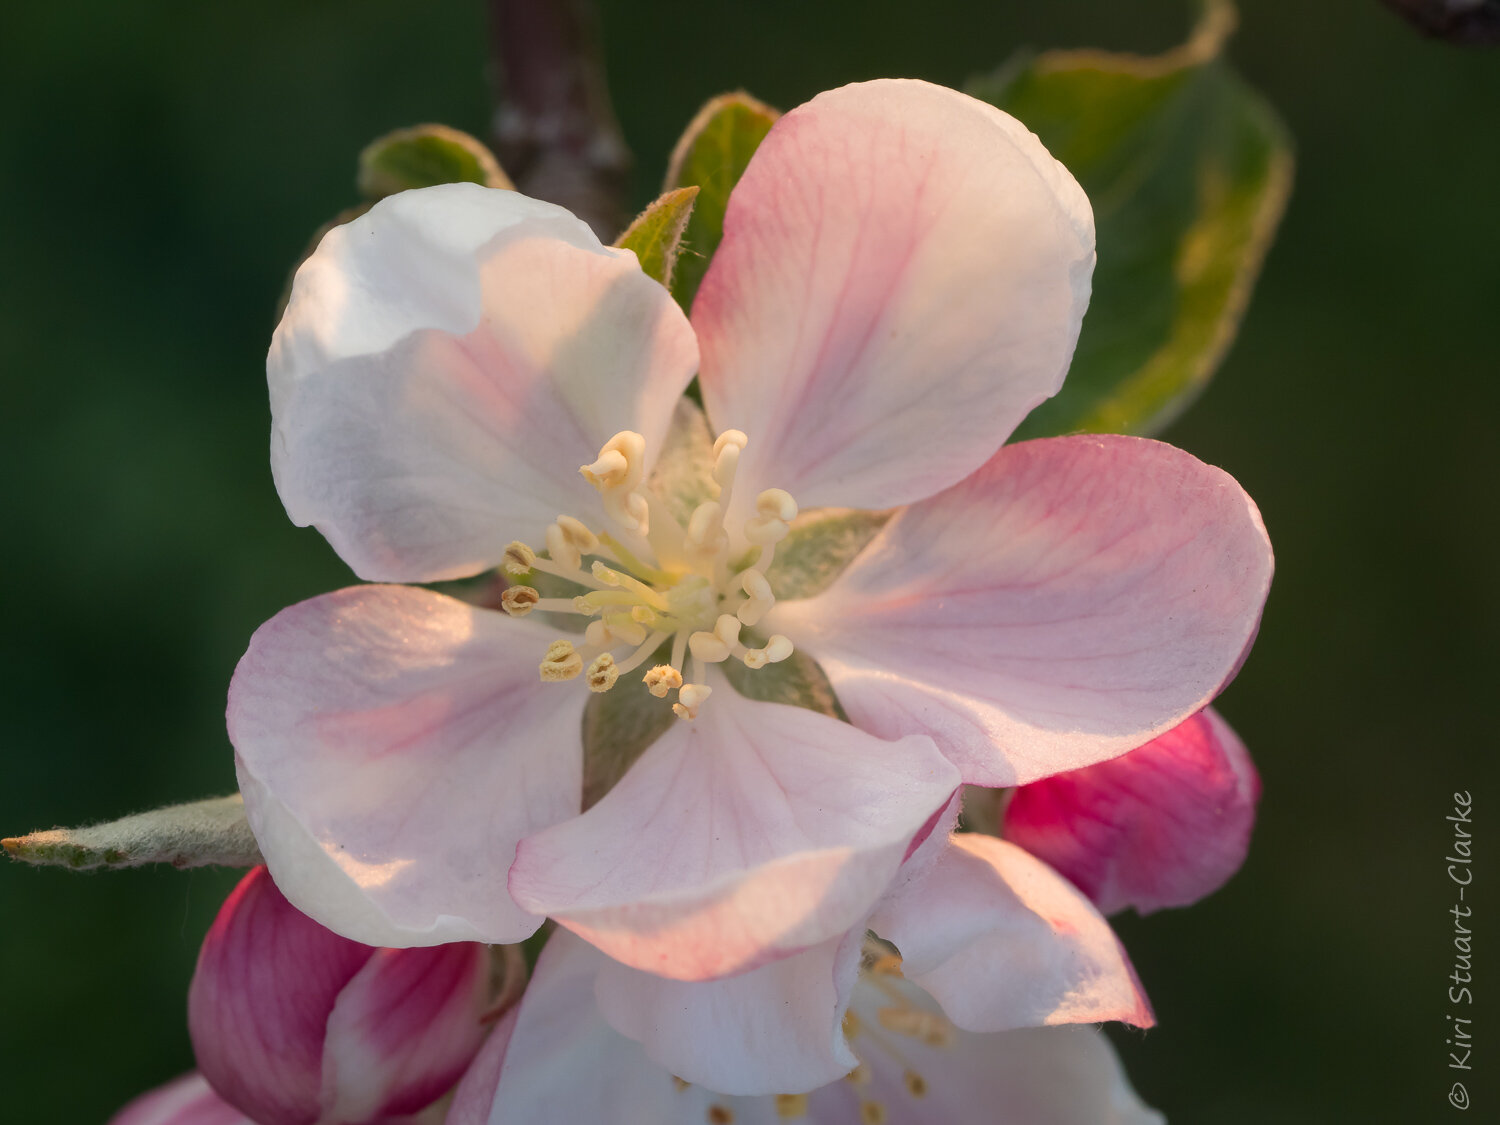  Apple tree blossom 3 